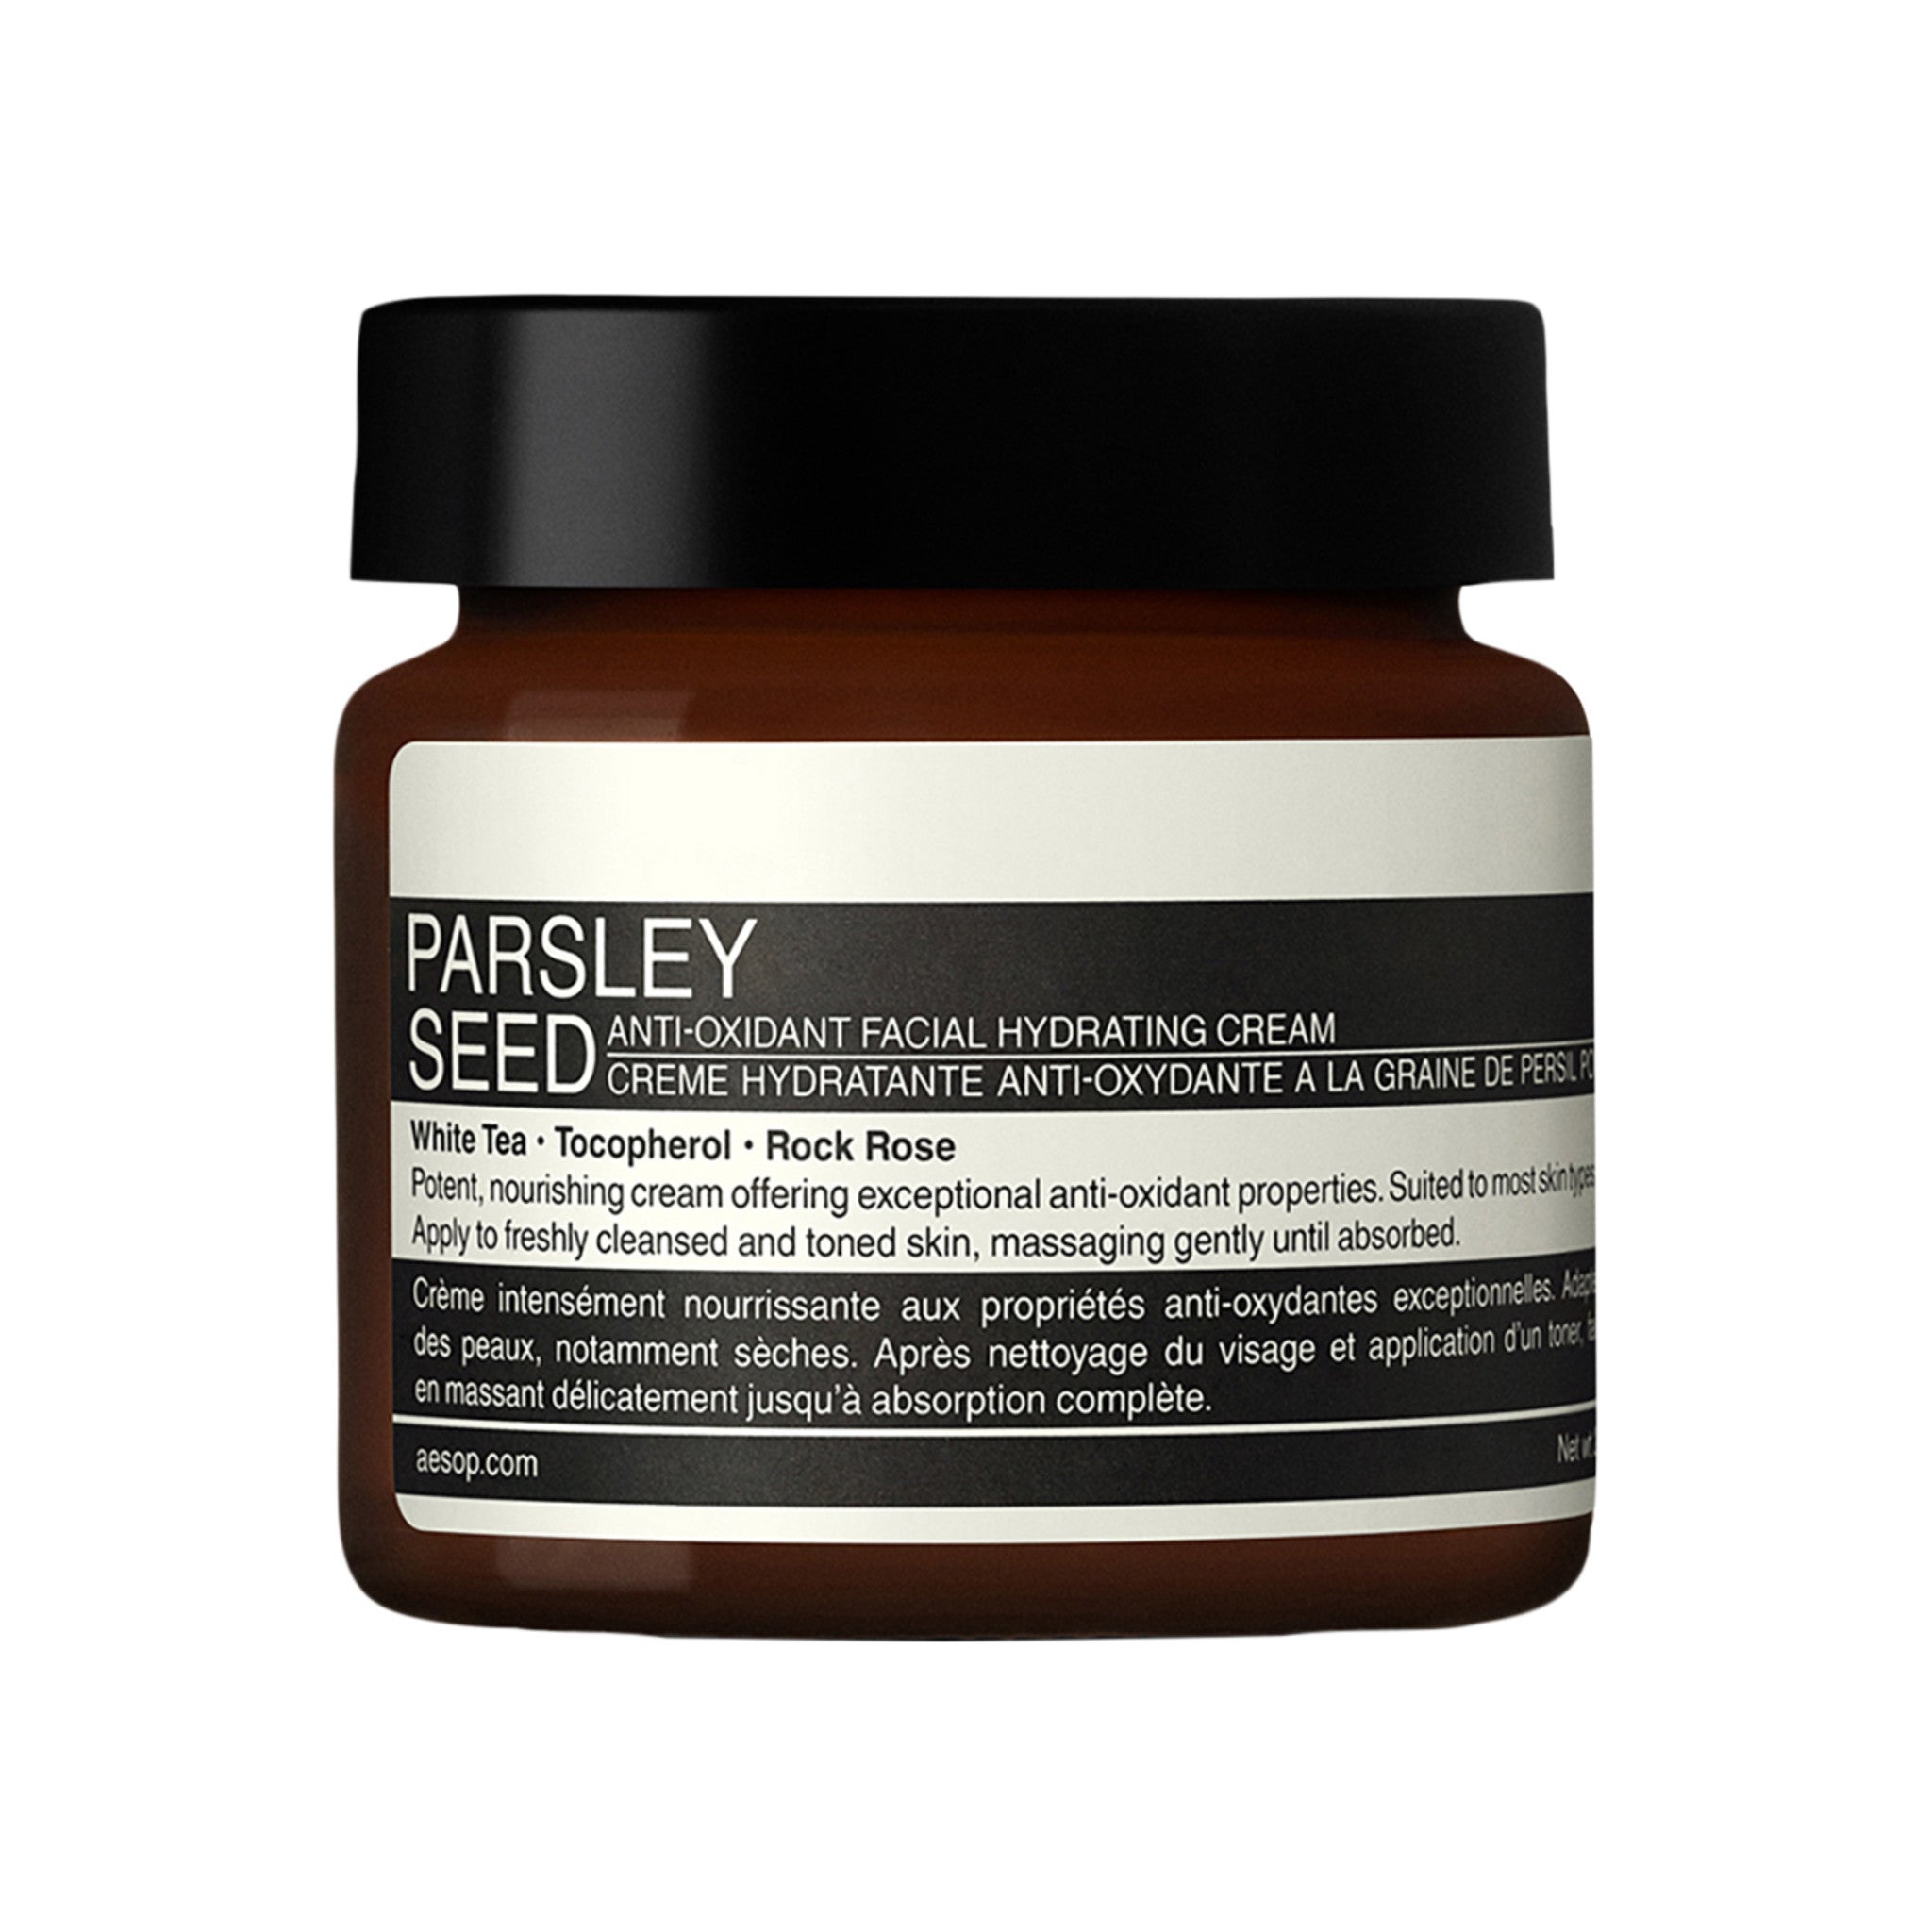 Aesop Parsley Seed Anti-Oxidant Facial Hydrating Cream main image.